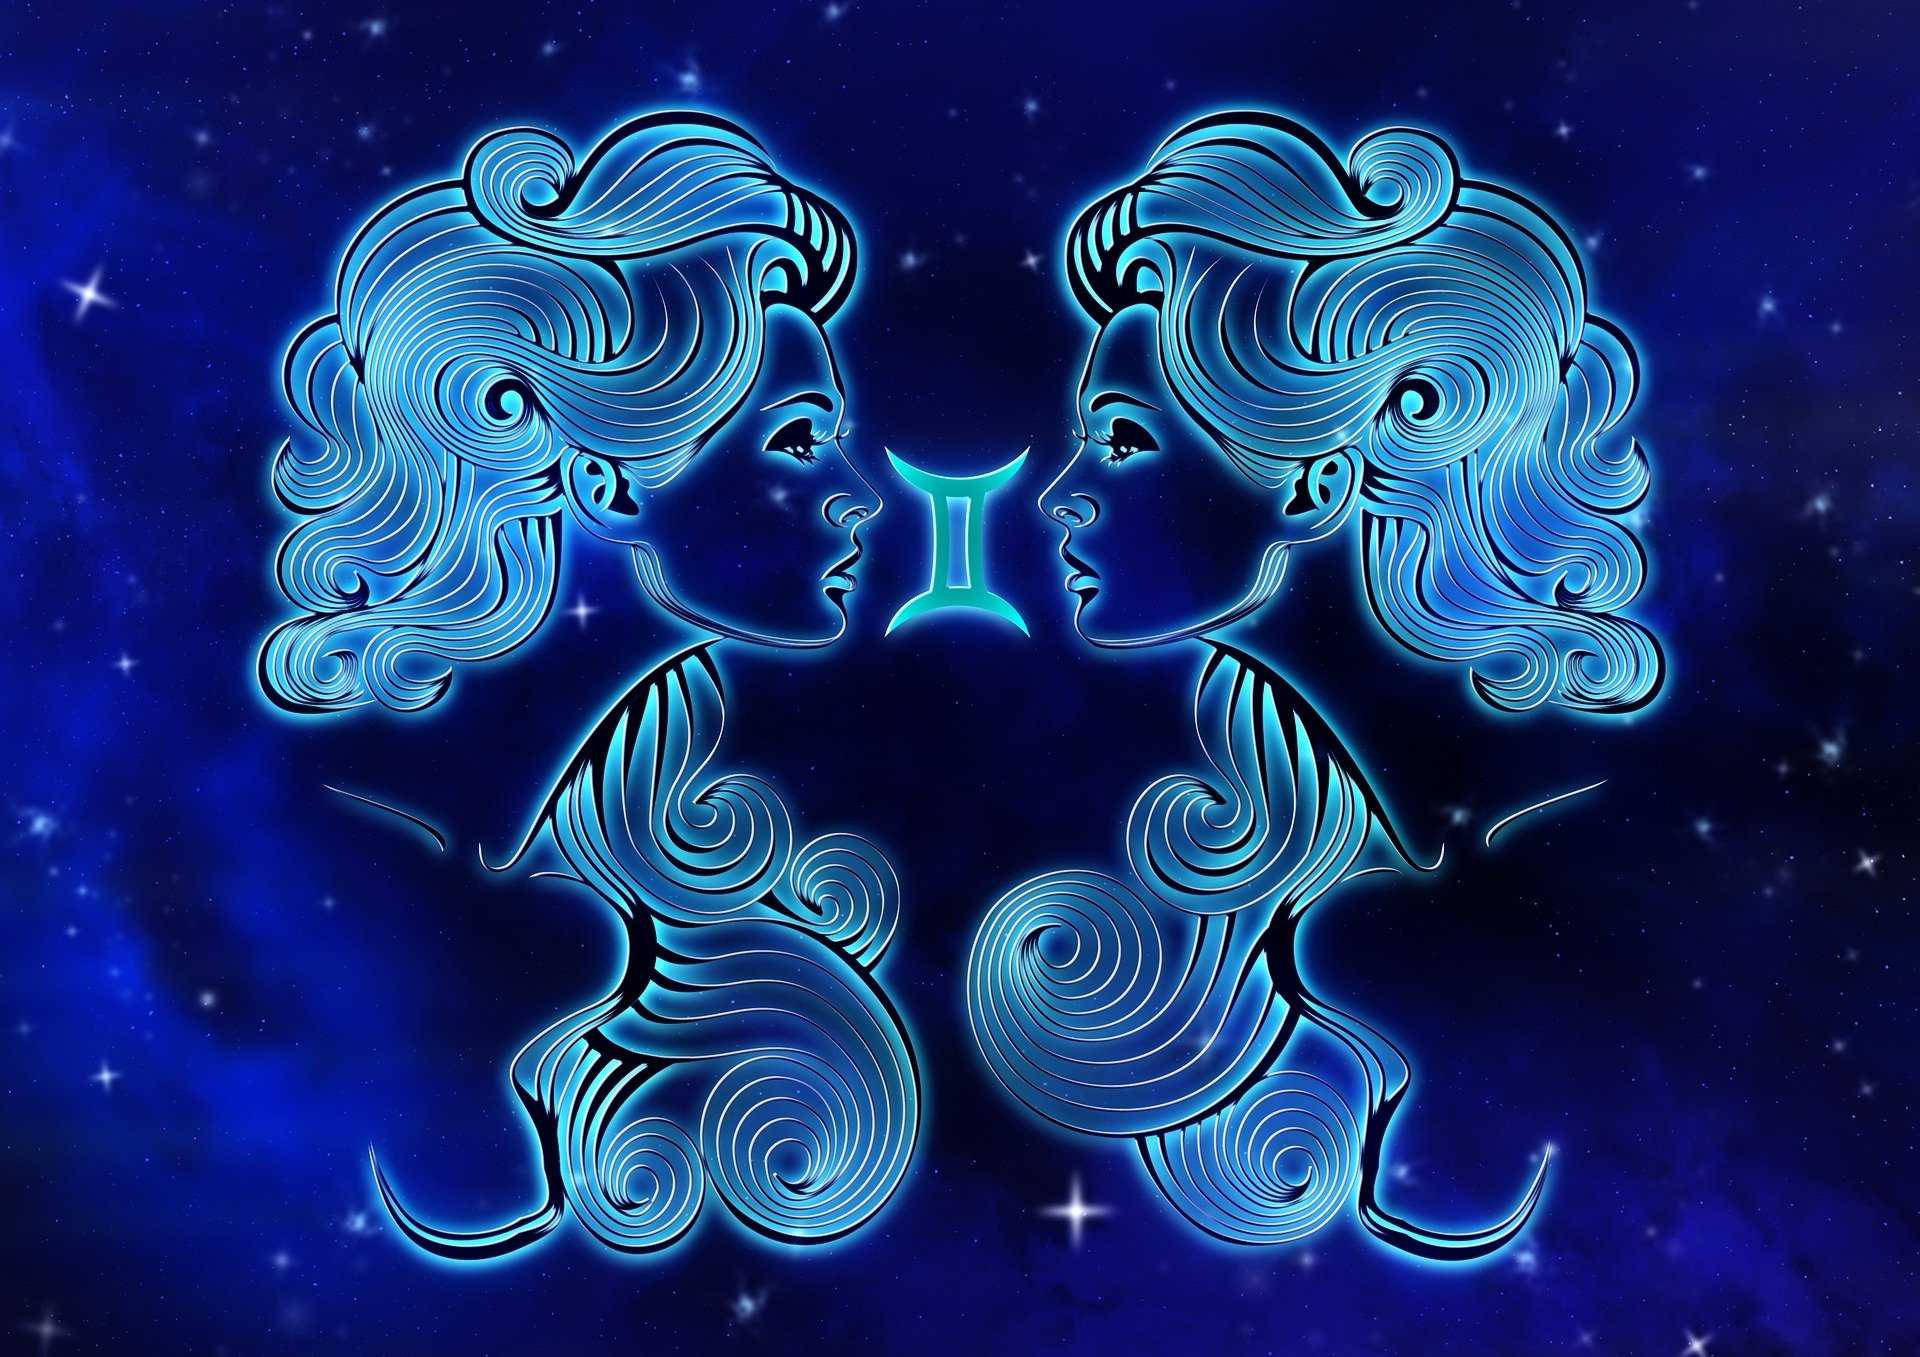 Gemini Celestial Twin Girls Wallpaper